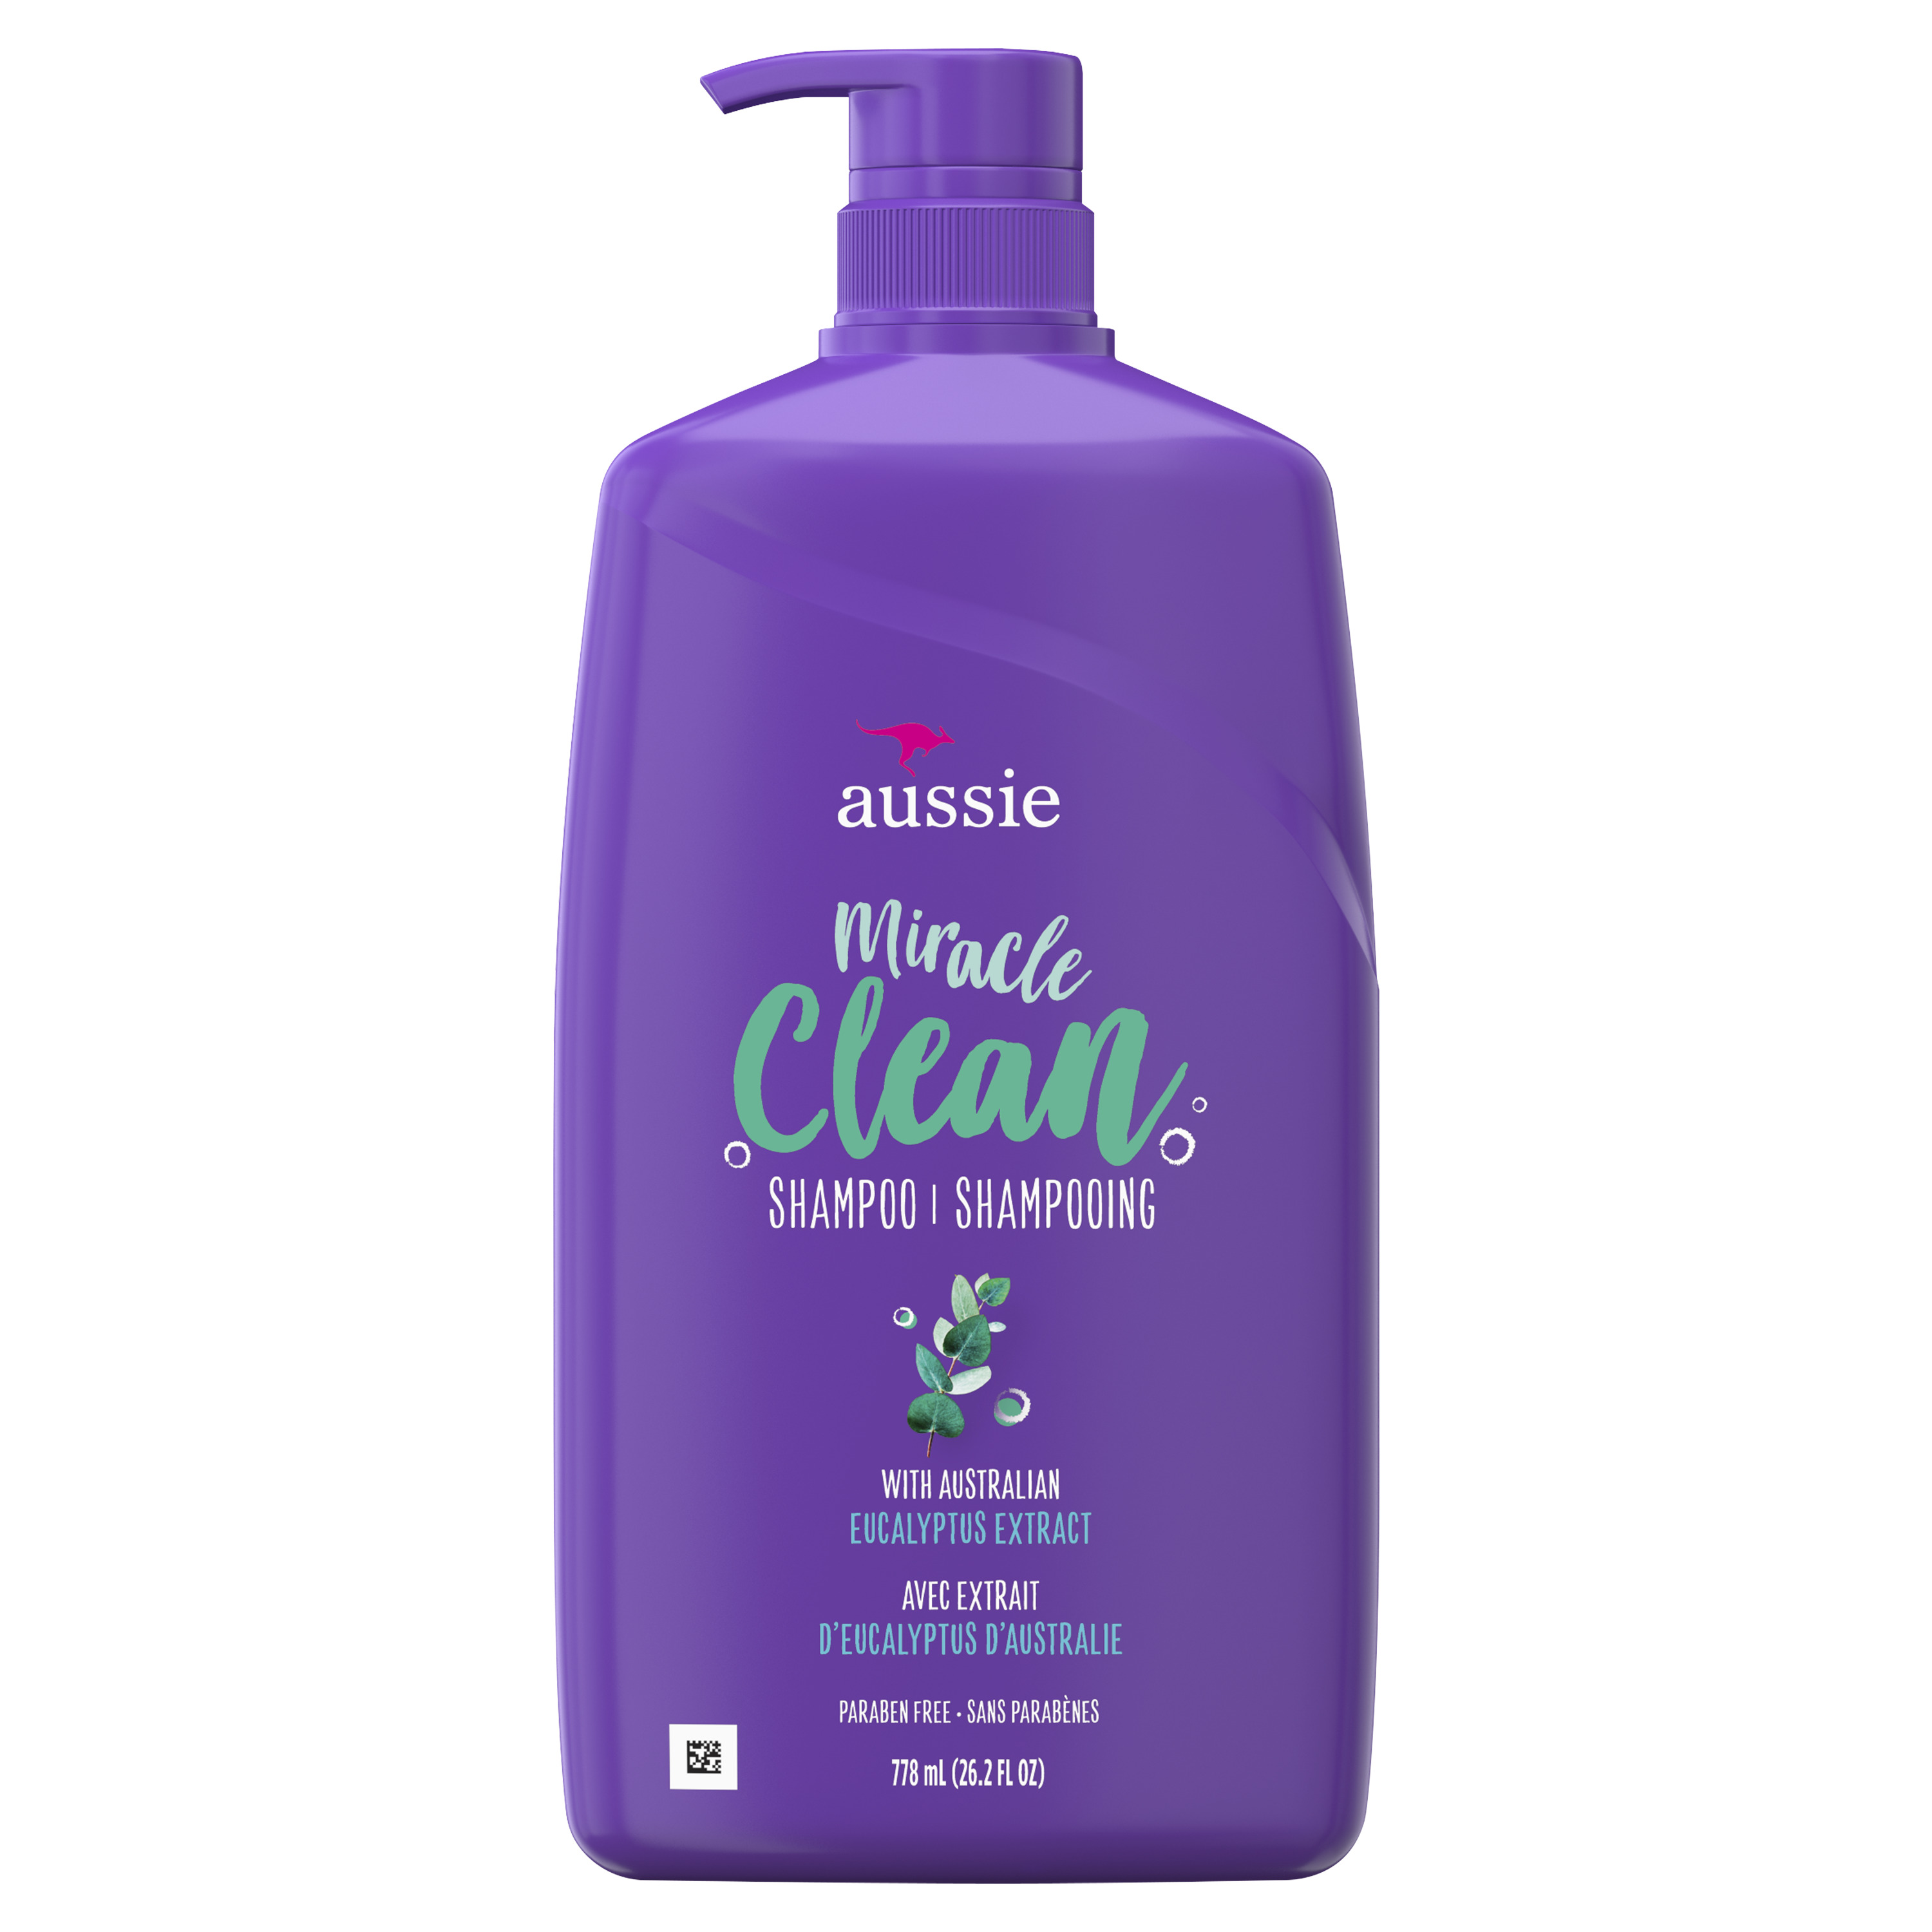 Aussie Miracle Clean Shampoo with Eucalyptus, Paraben Free, 26.2 Fl Oz - image 1 of 7